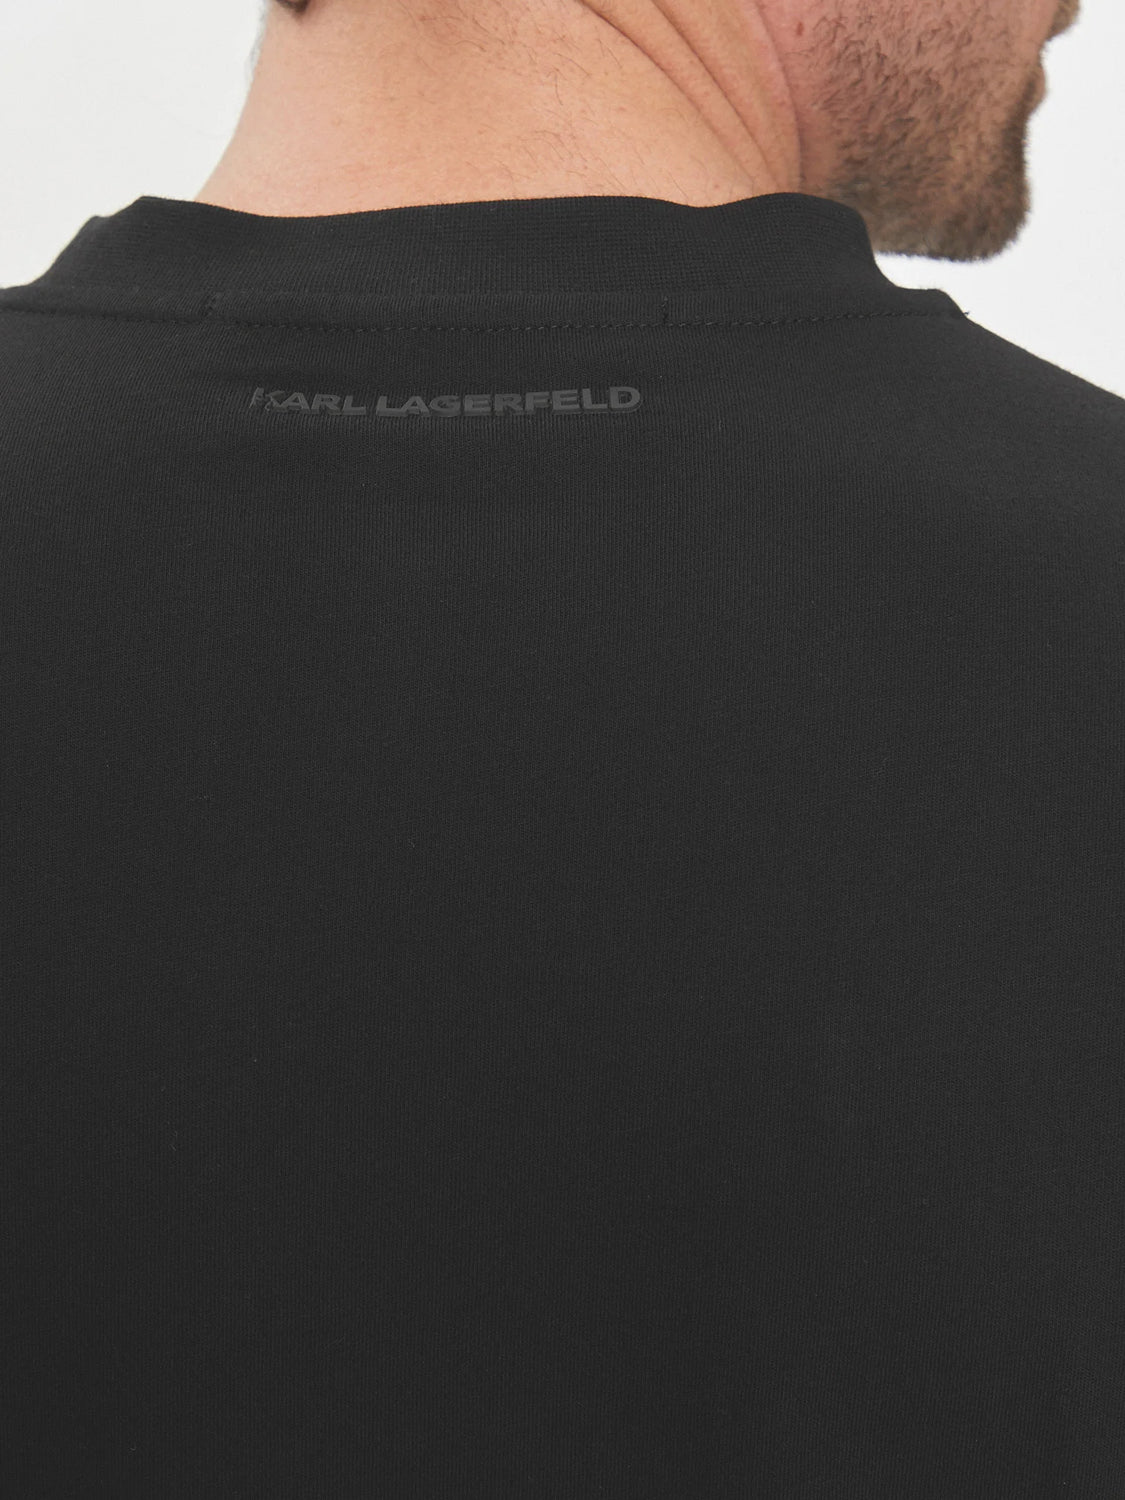 Karl Lagerfeld T Shirt Kl755082 Blk Gold Preto Ouro_shot4